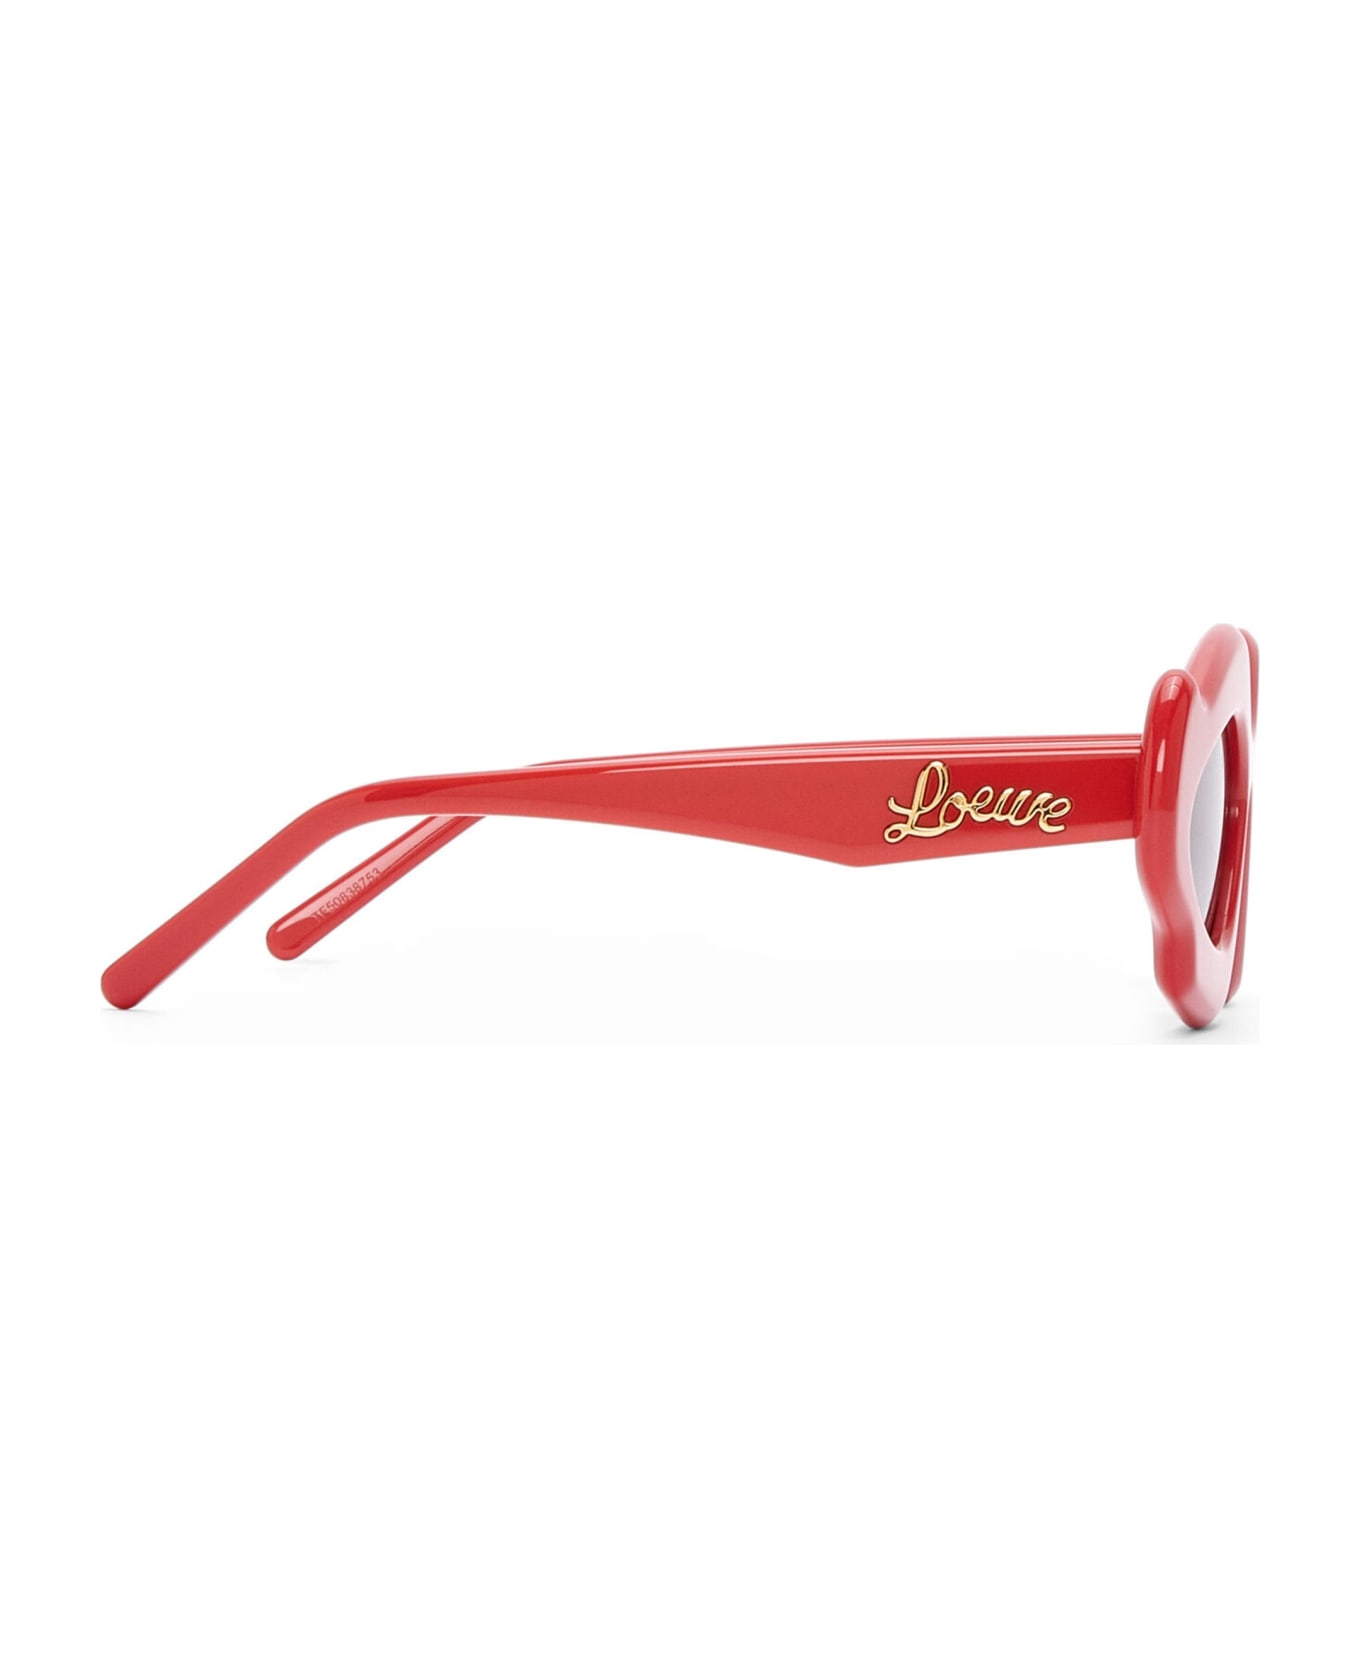 Loewe Lw40109u - Red Sunglasses - red サングラス